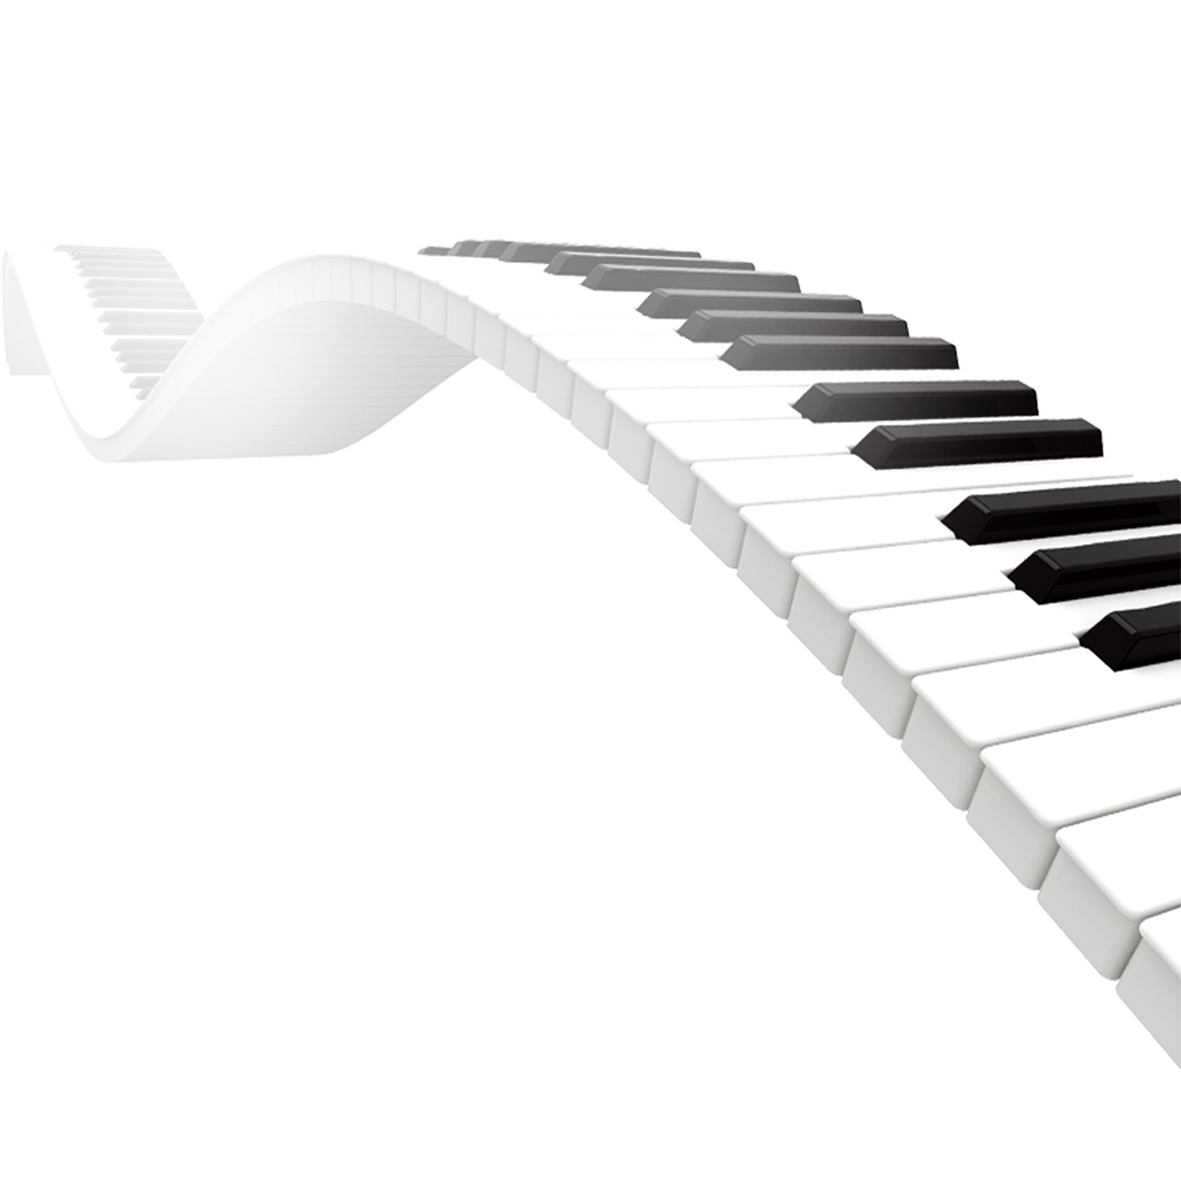 Musical keyboard Piano - Artistic piano keyboard png download - 1181* ...